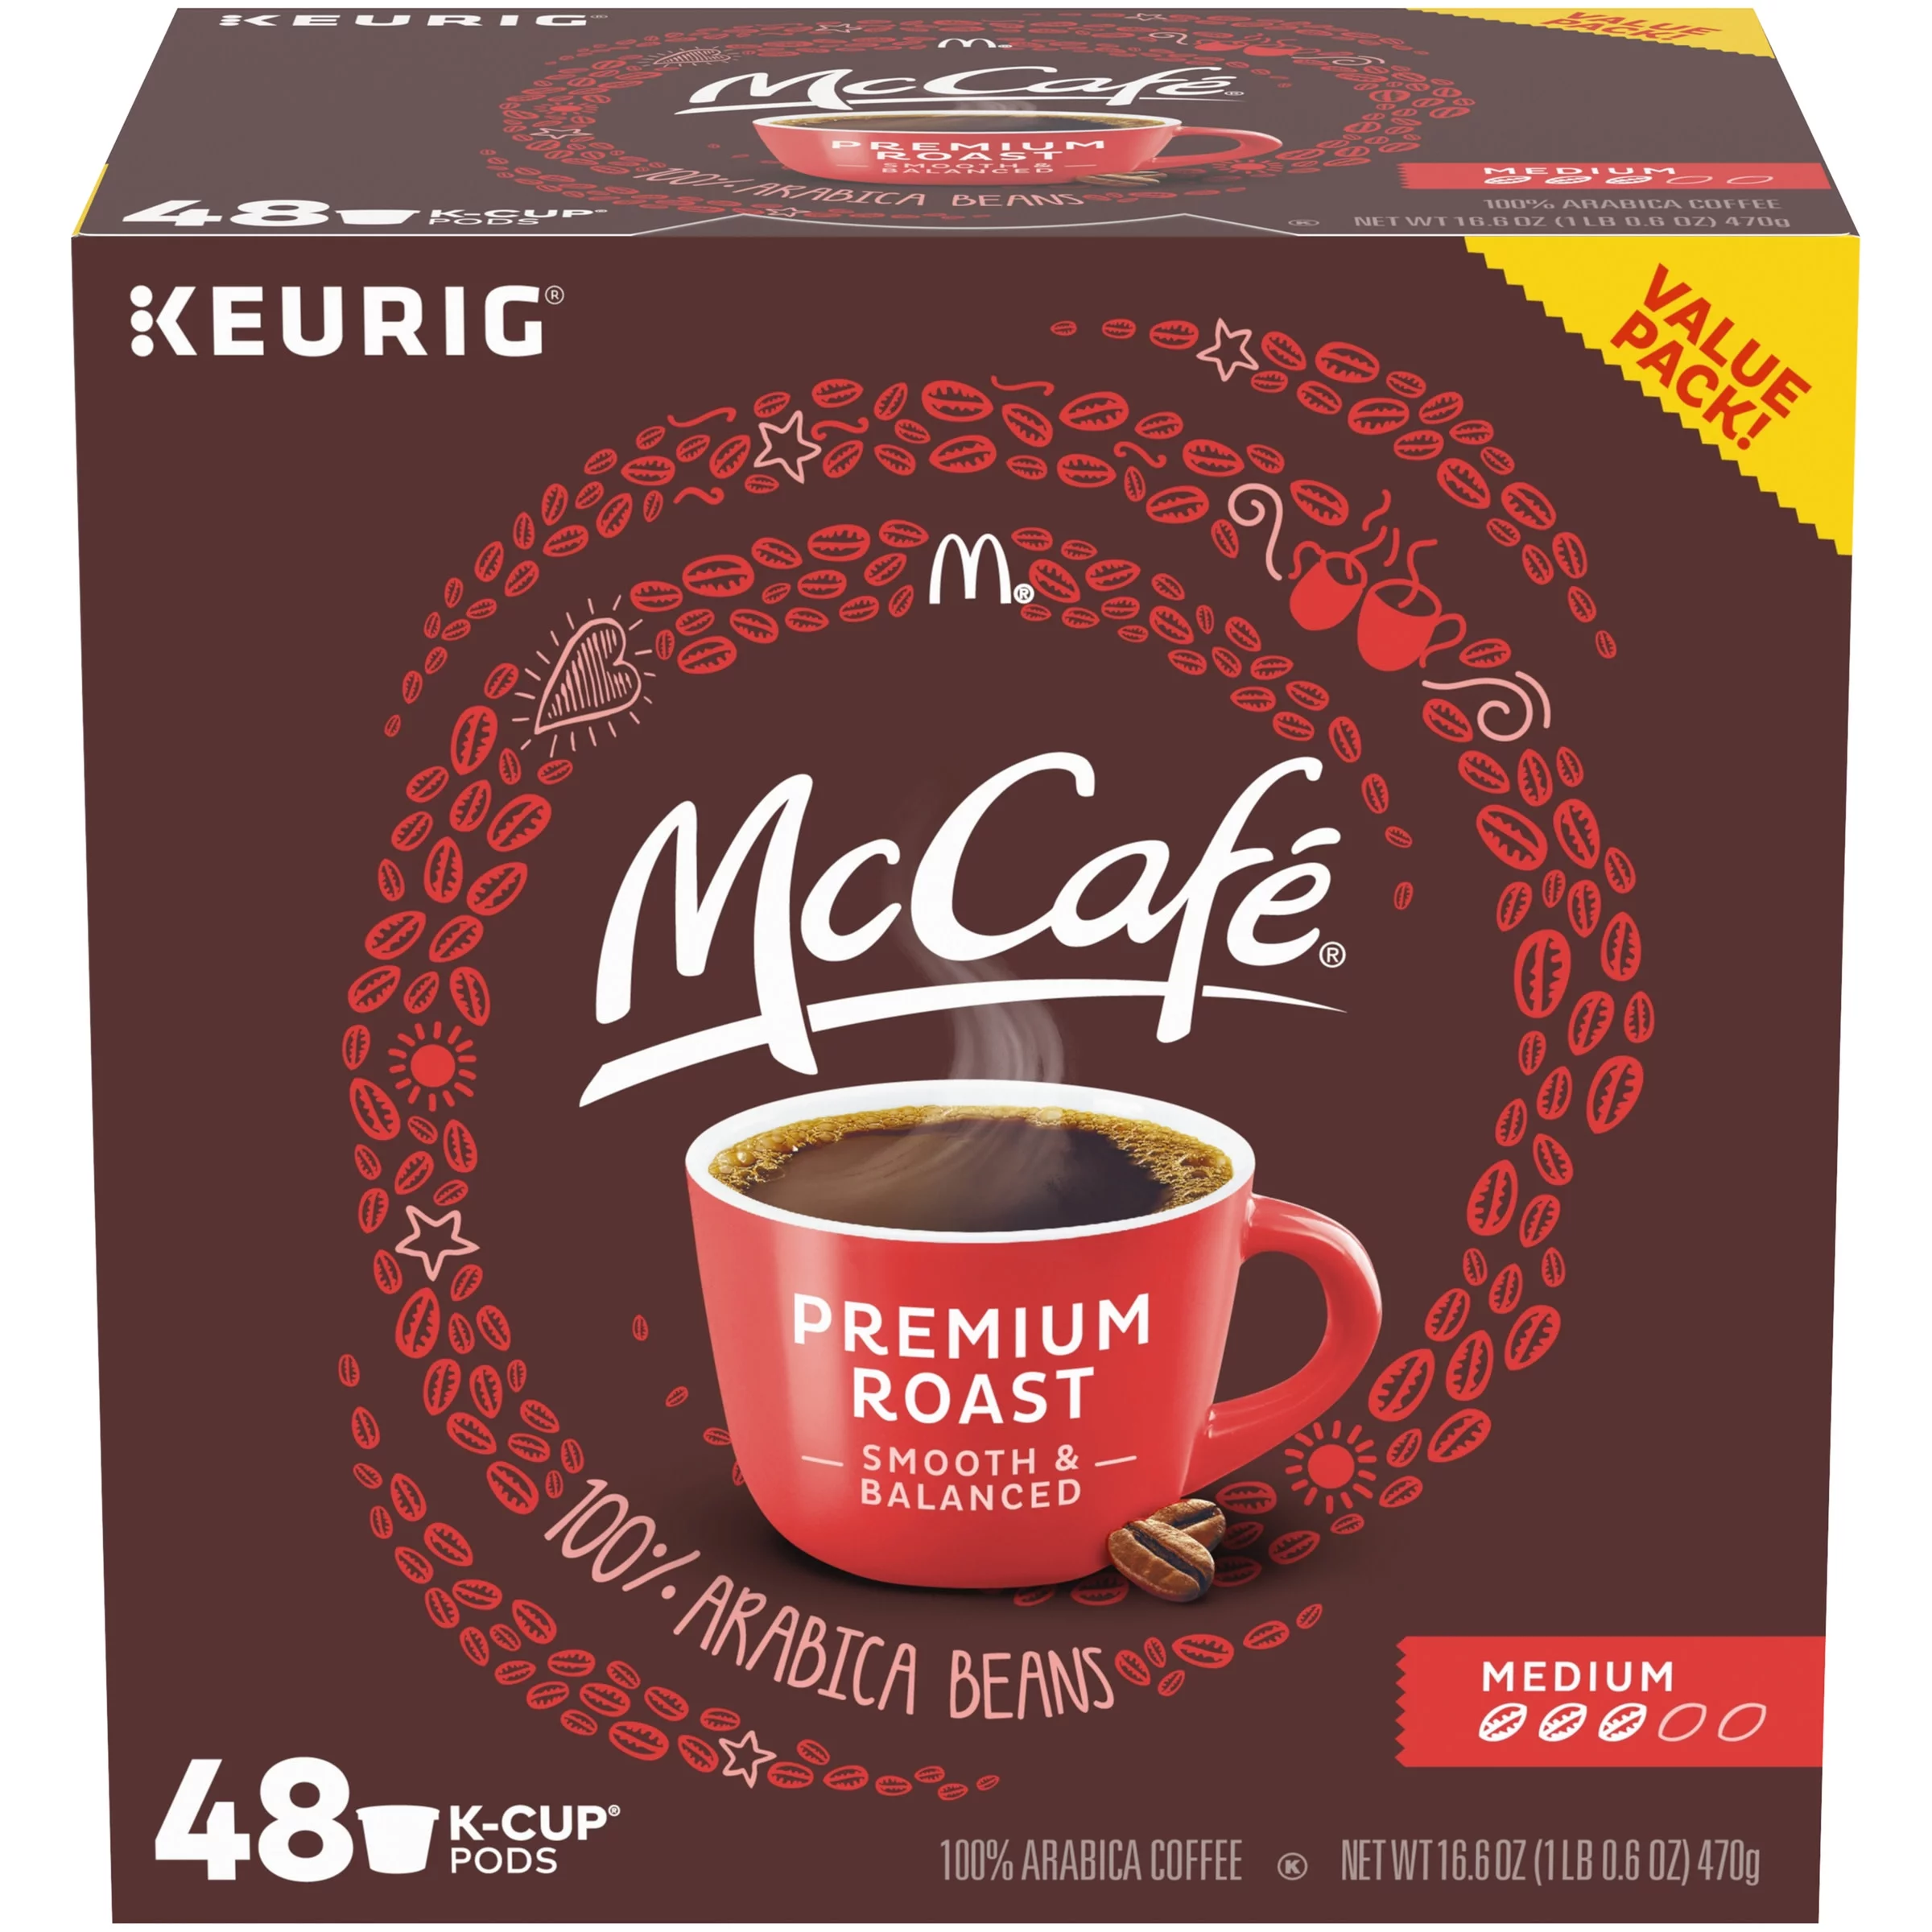 McCafe Premium Roast Medium Coffee K-Cup Pods, Caffeinated, 48 ct - 16.6 oz Box